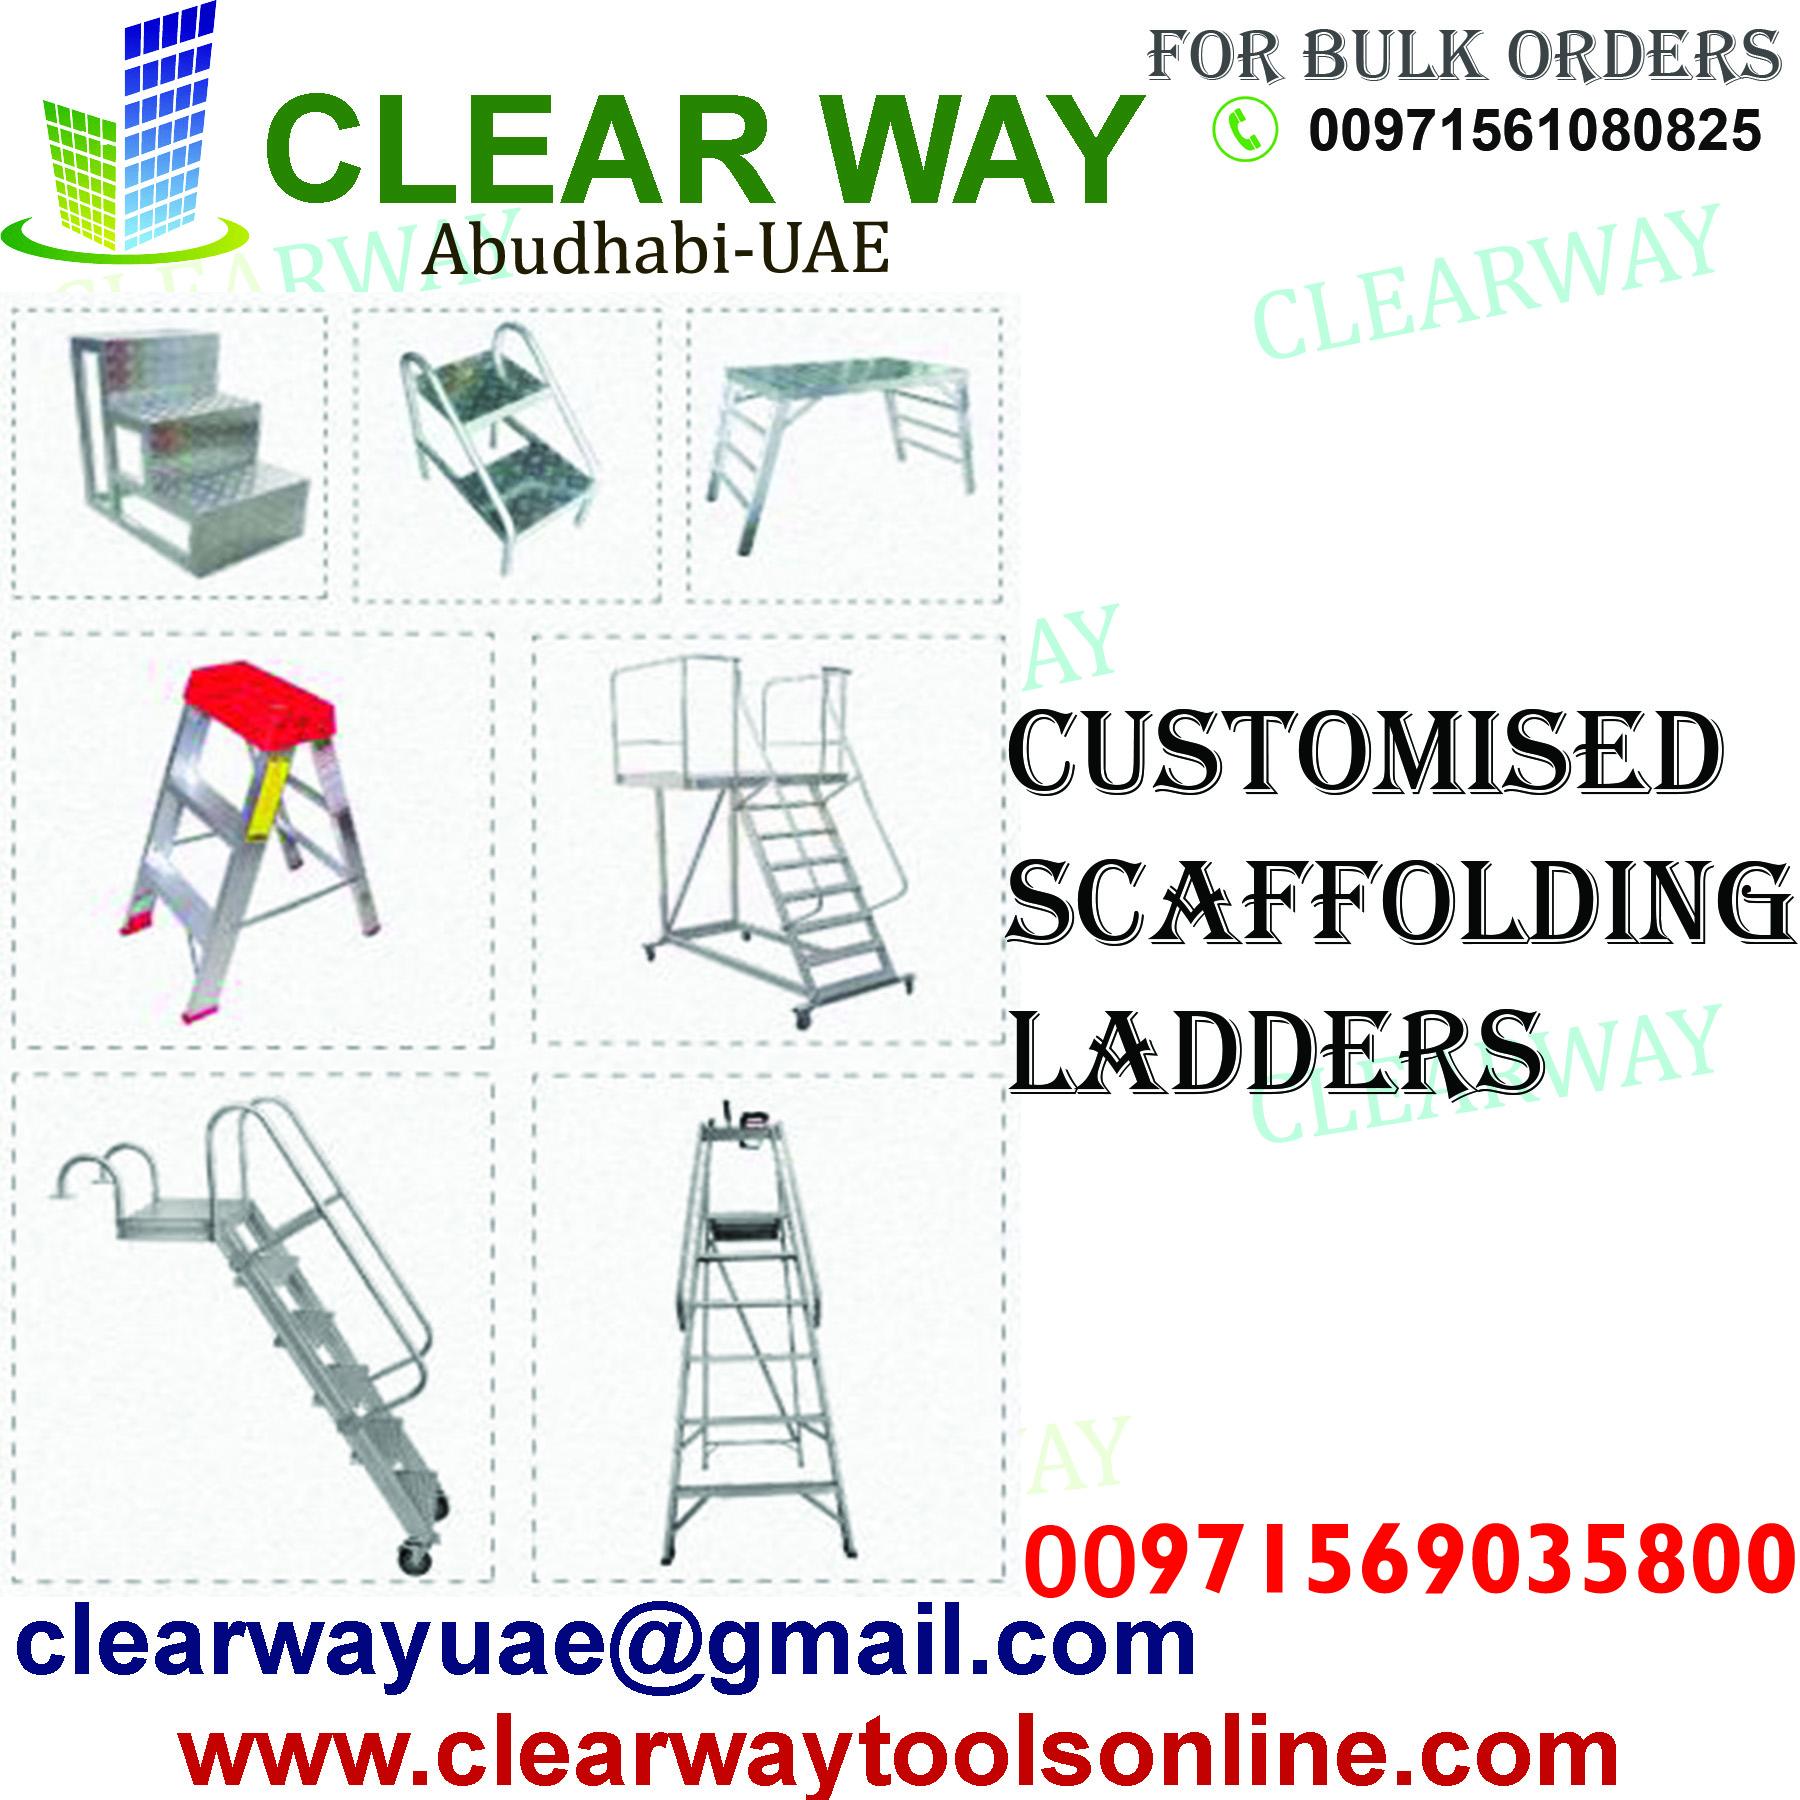 customised scaffolding ladders clearway mussafah abudhabi uae